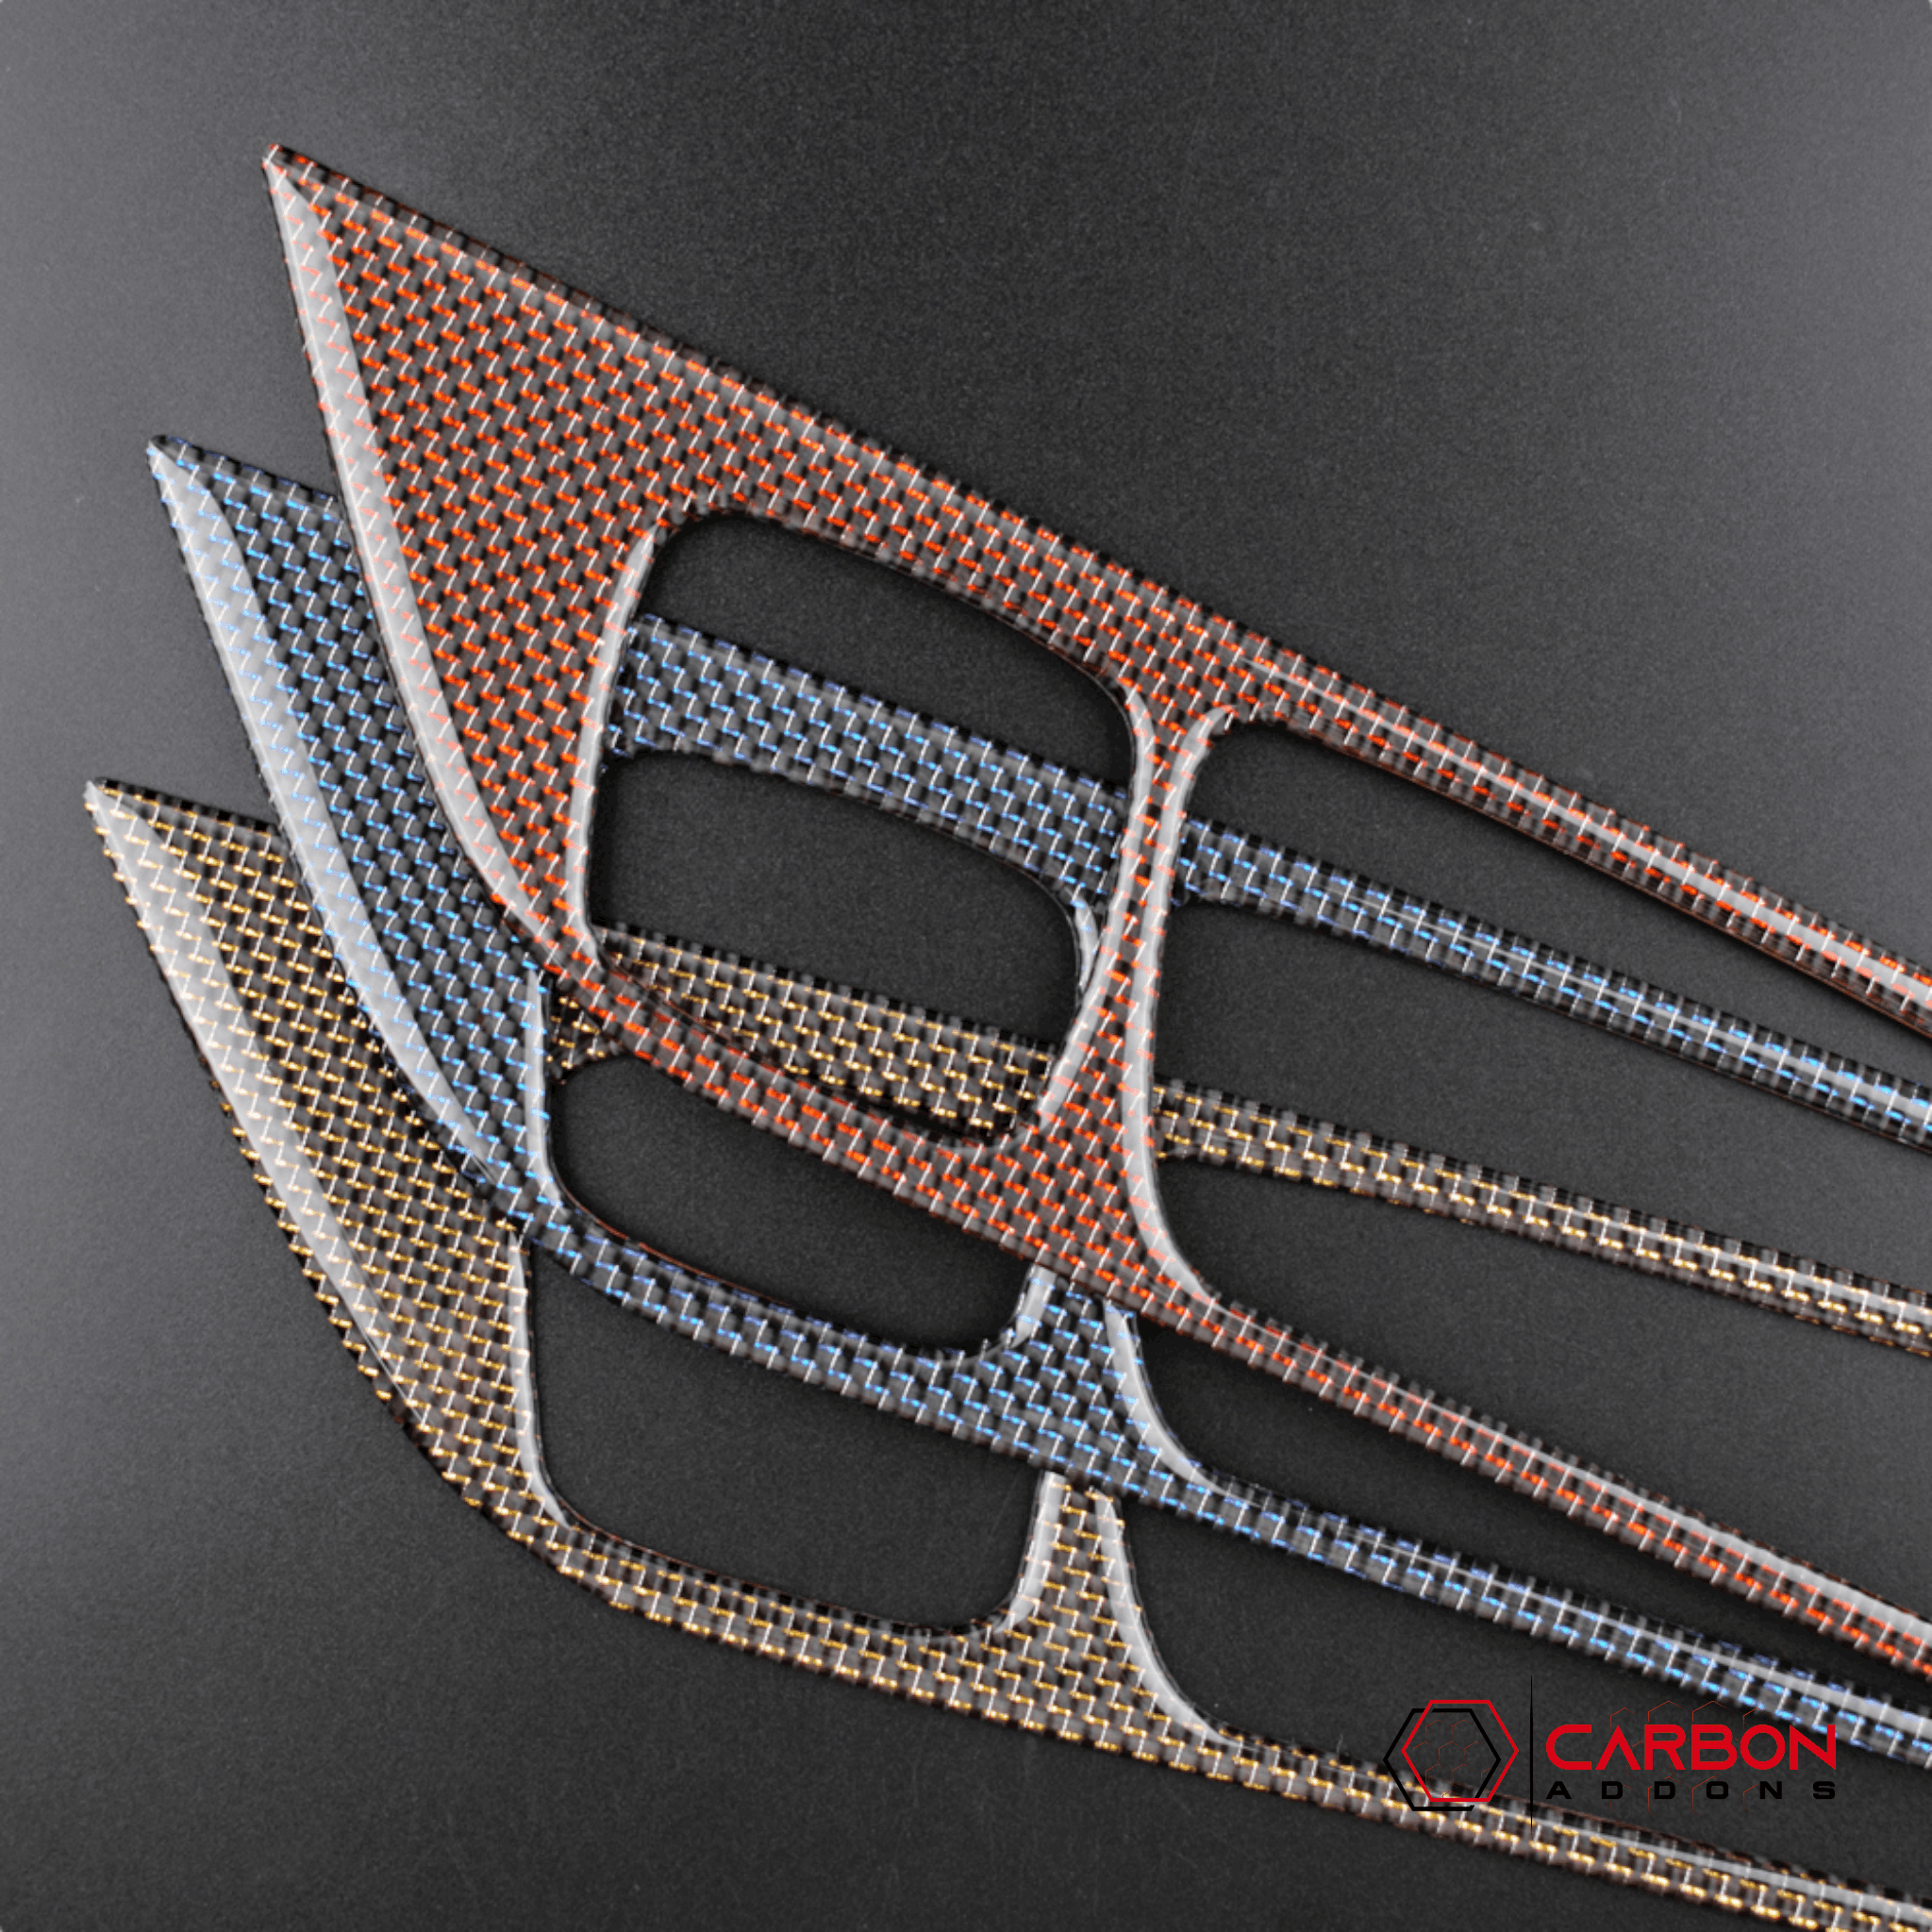 Reflective Carbon Fiber Interior Door Handle Trim Overlay for Ford Mustang 2015-2023 - carbonaddons Carbon Fiber Parts, Accessories, Upgrades, Mods